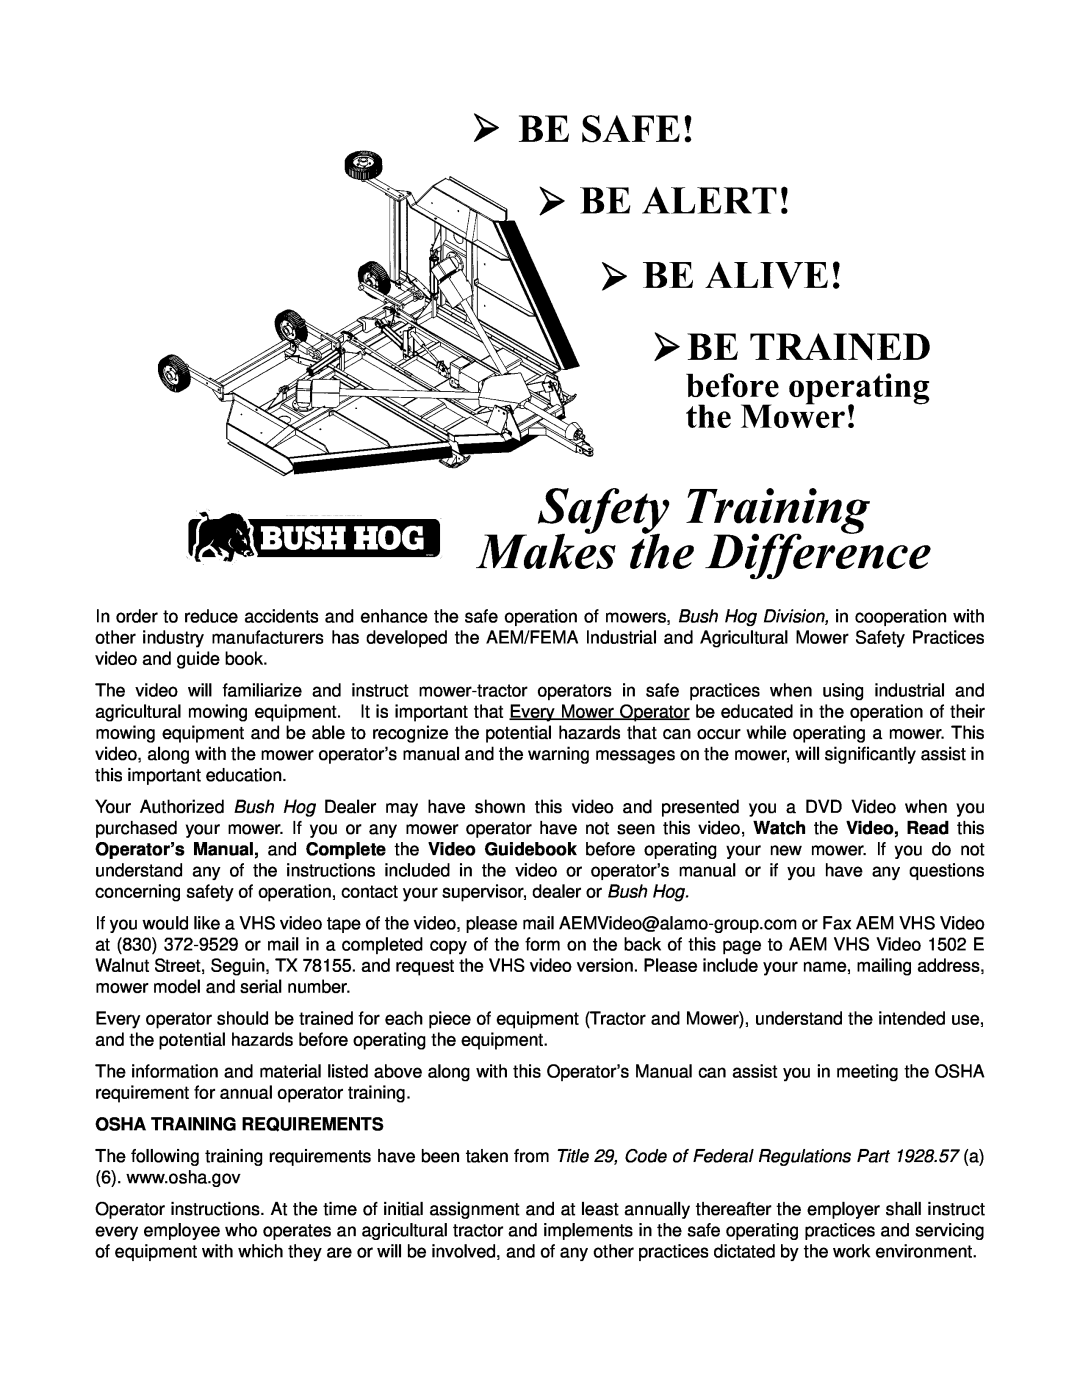 Bush Hog RMB 1660 manual Osha Training Requirements 